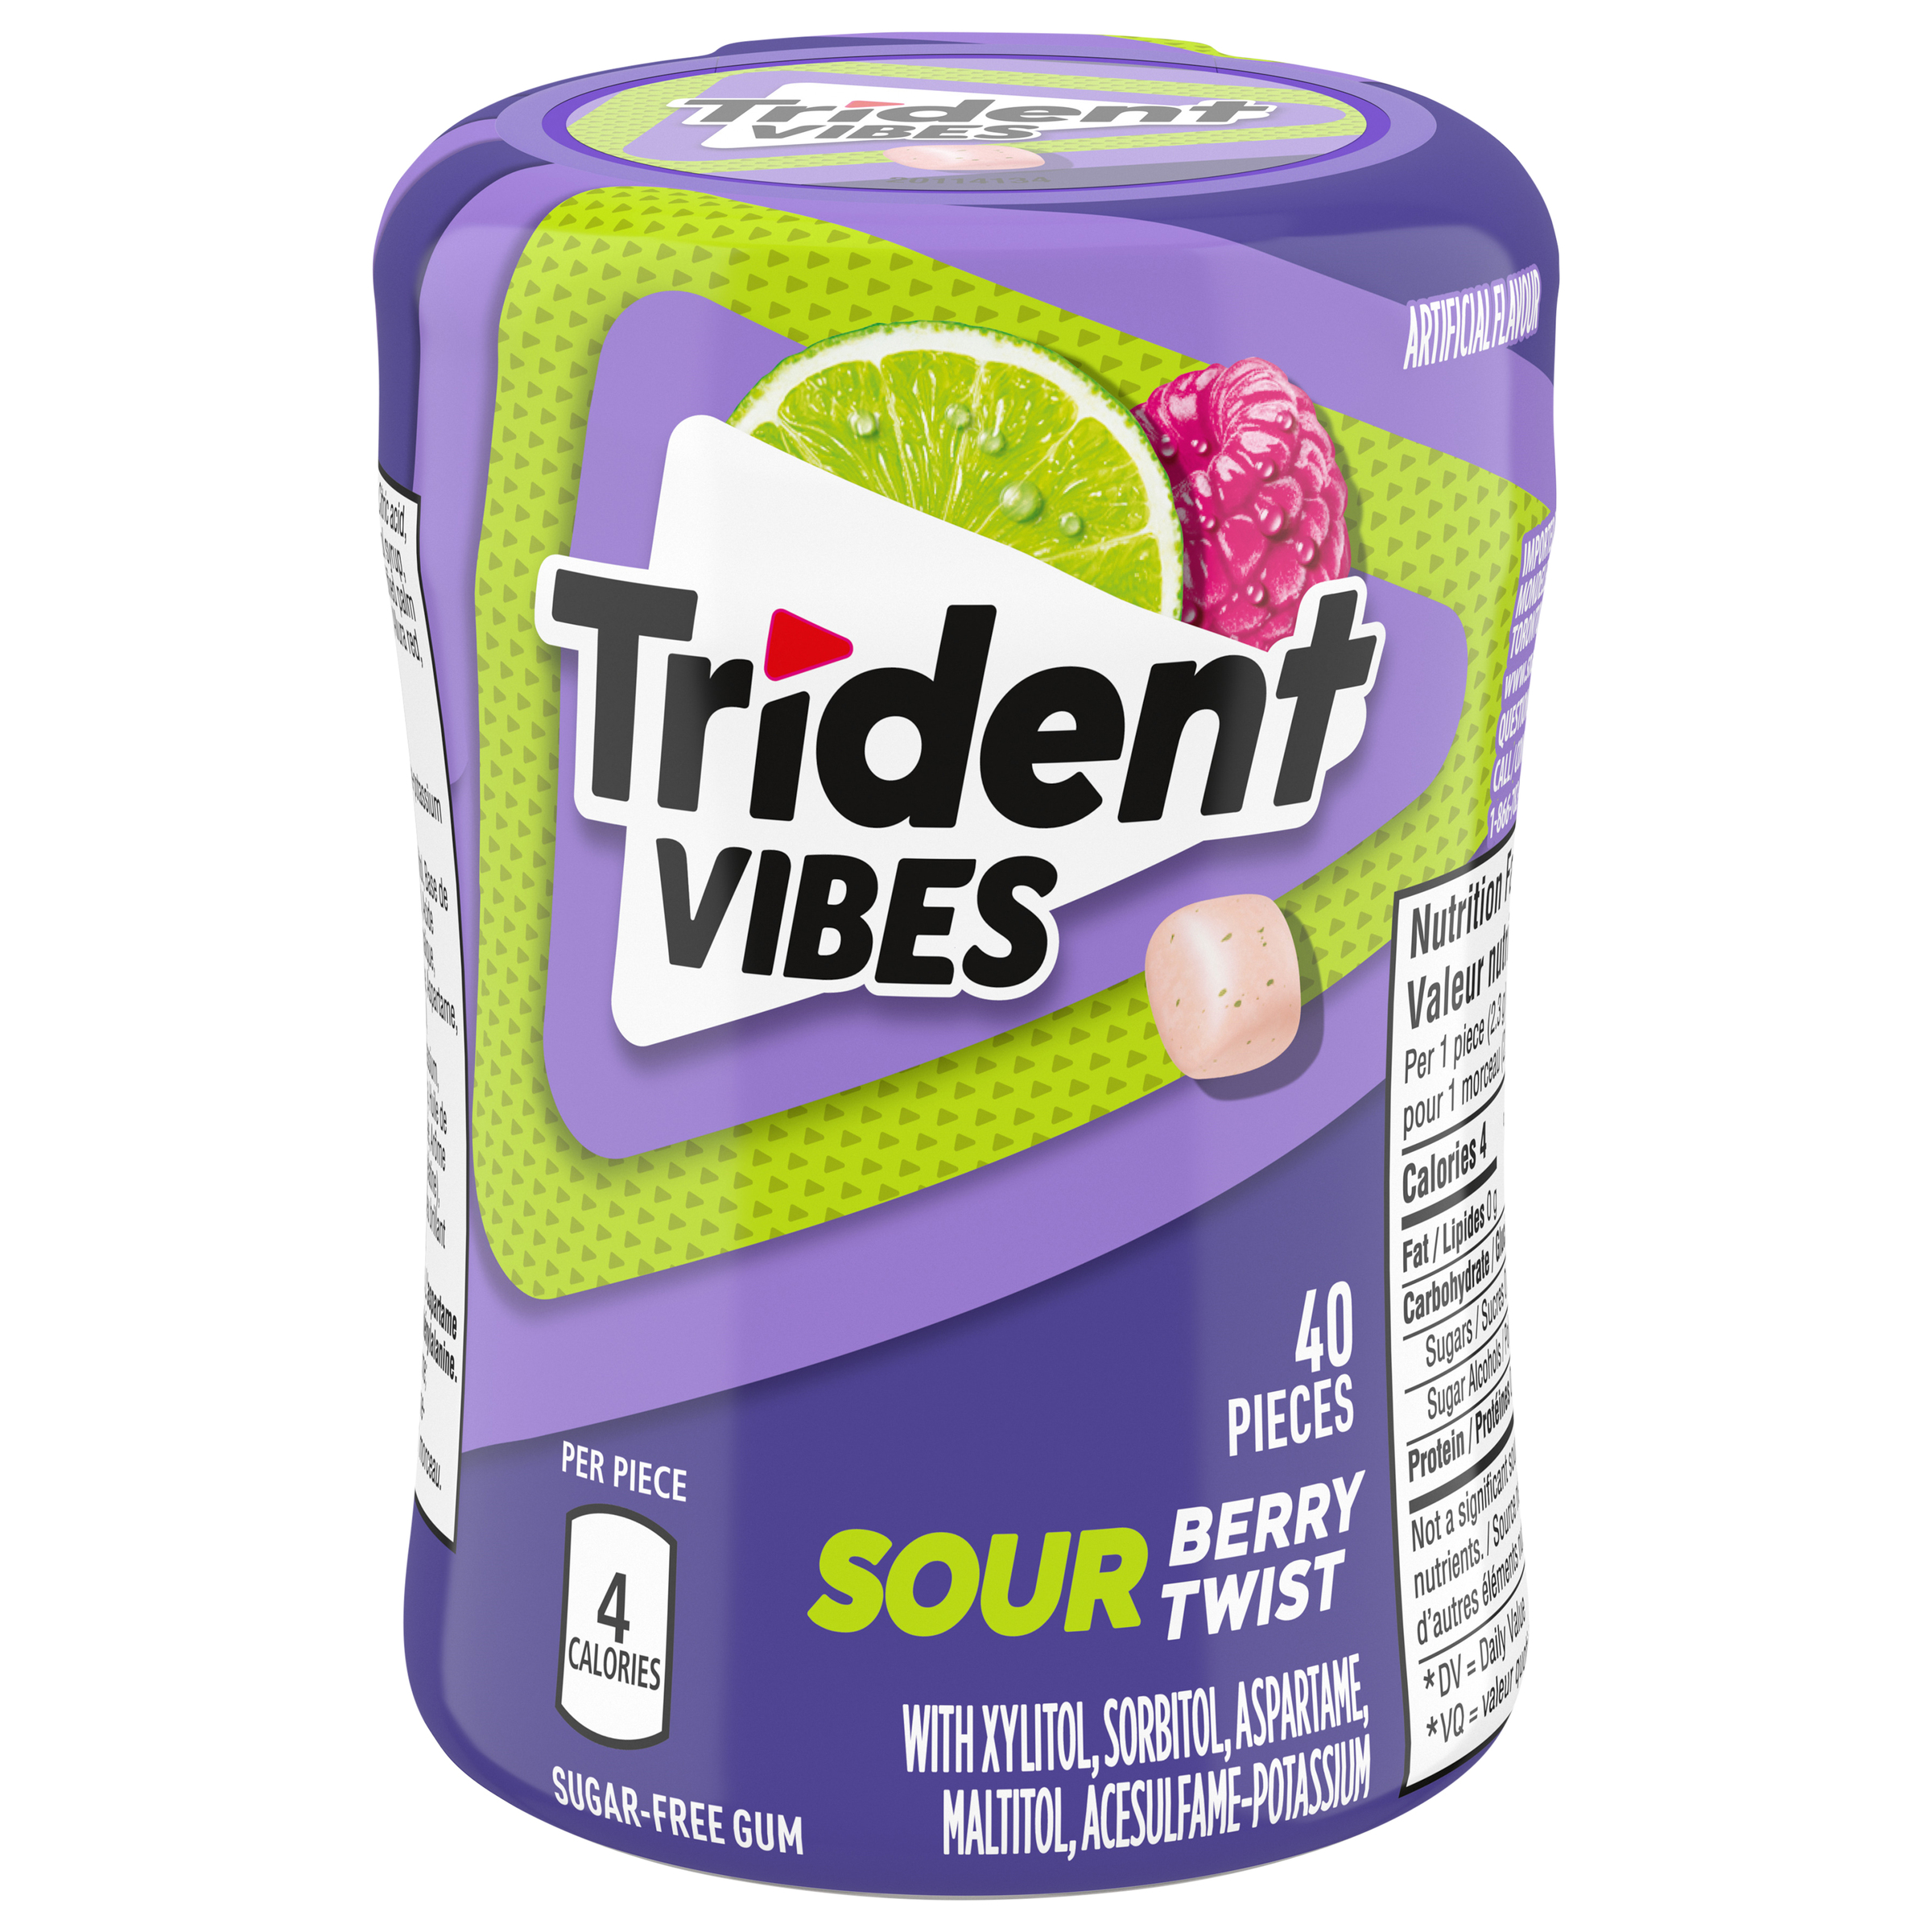 Trident Vibes Sour Sugar Free Gum, Berry Twist Flavour, 1 Go Cup (40 Pieces)